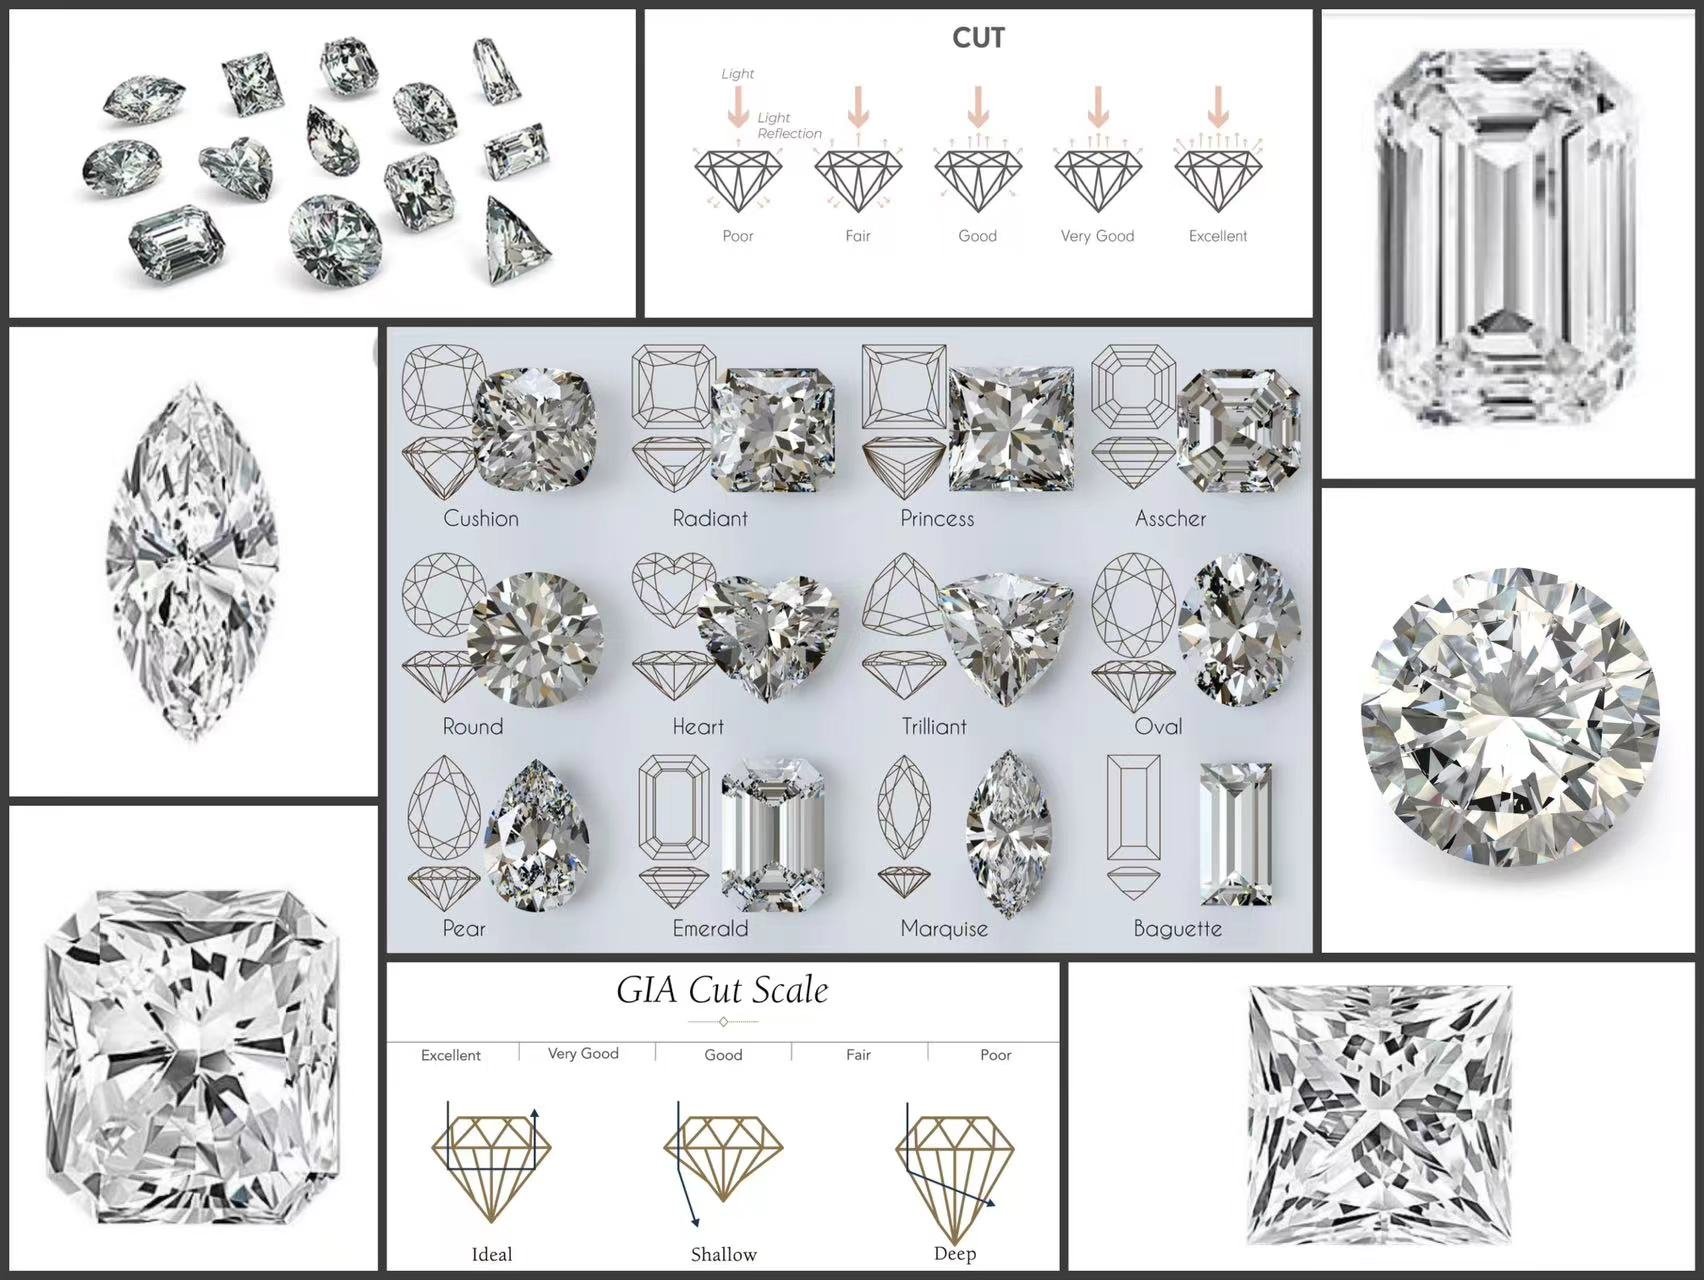 Christina Chao: Cut, from the '4Cs' of grading diamonds.